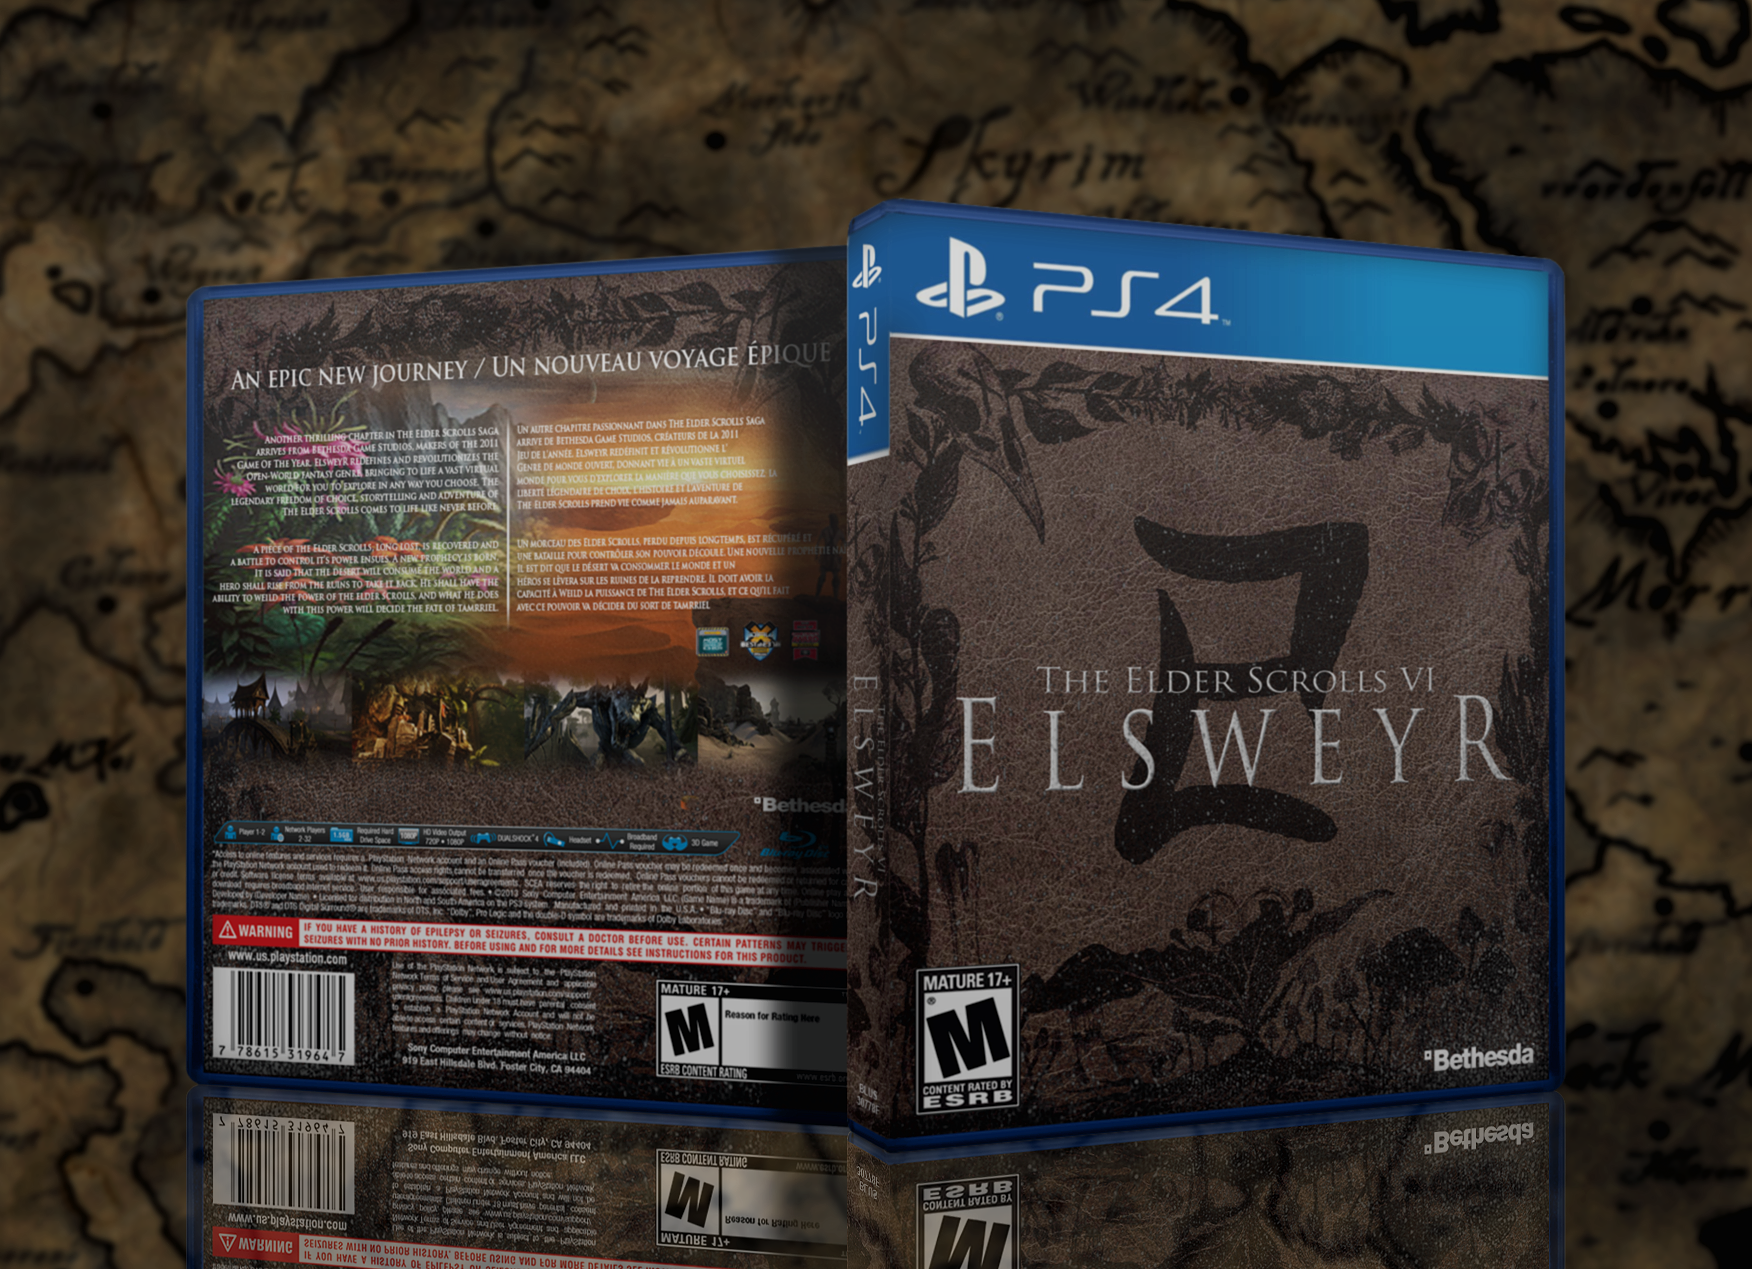 The Elder Scrolls VI: Elsweyr box cover